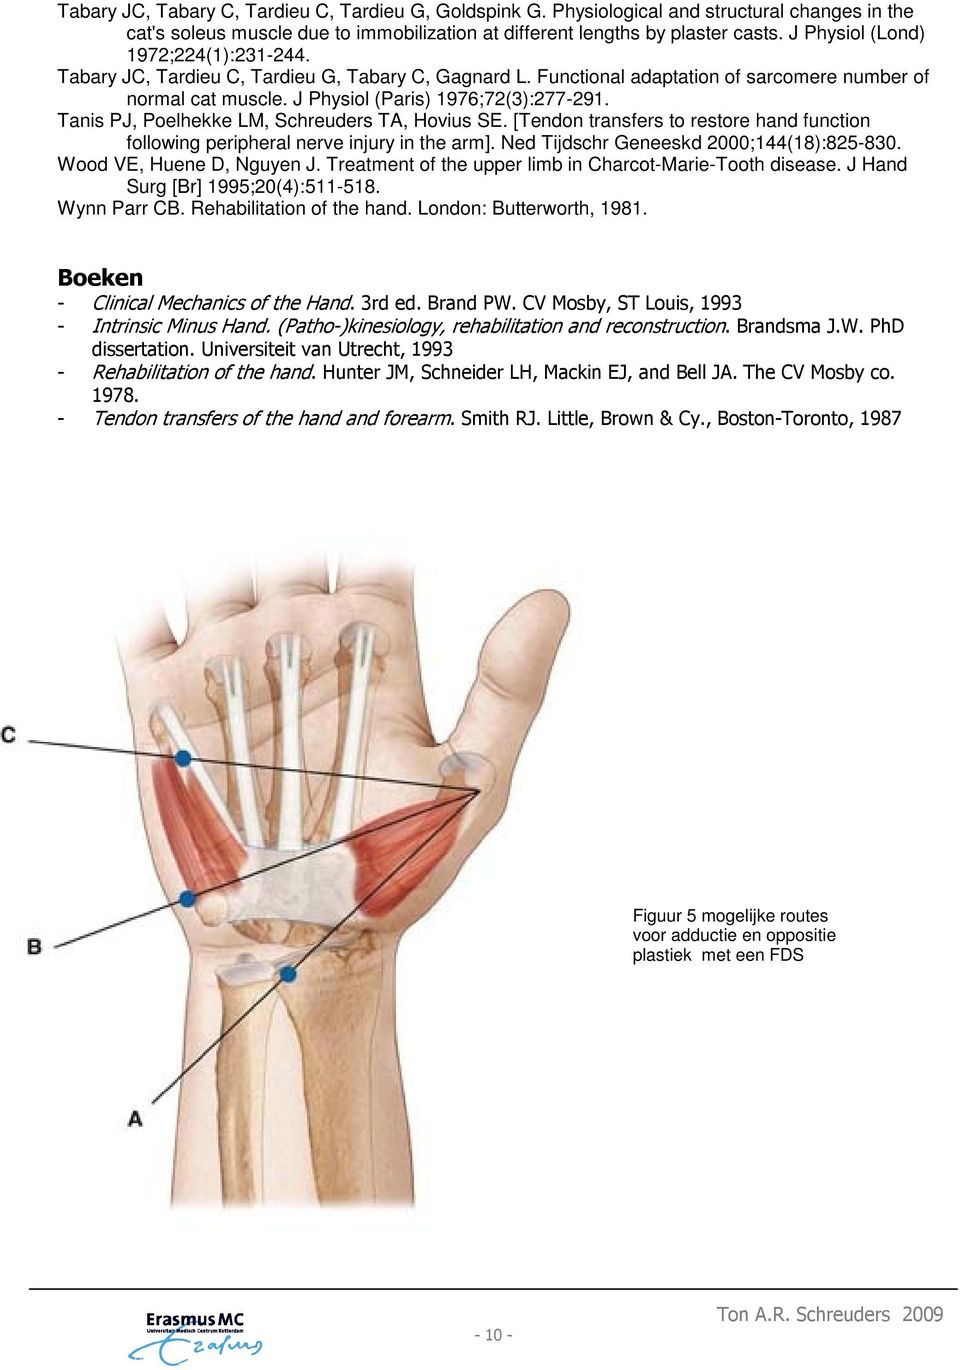 Tanis PJ, Poelhekke LM, Schreuders TA, Hovius SE. [Tendon transfers to restore hand function following peripheral nerve injury in the arm]. Ned Tijdschr Geneeskd 2000;144(18):825-830.